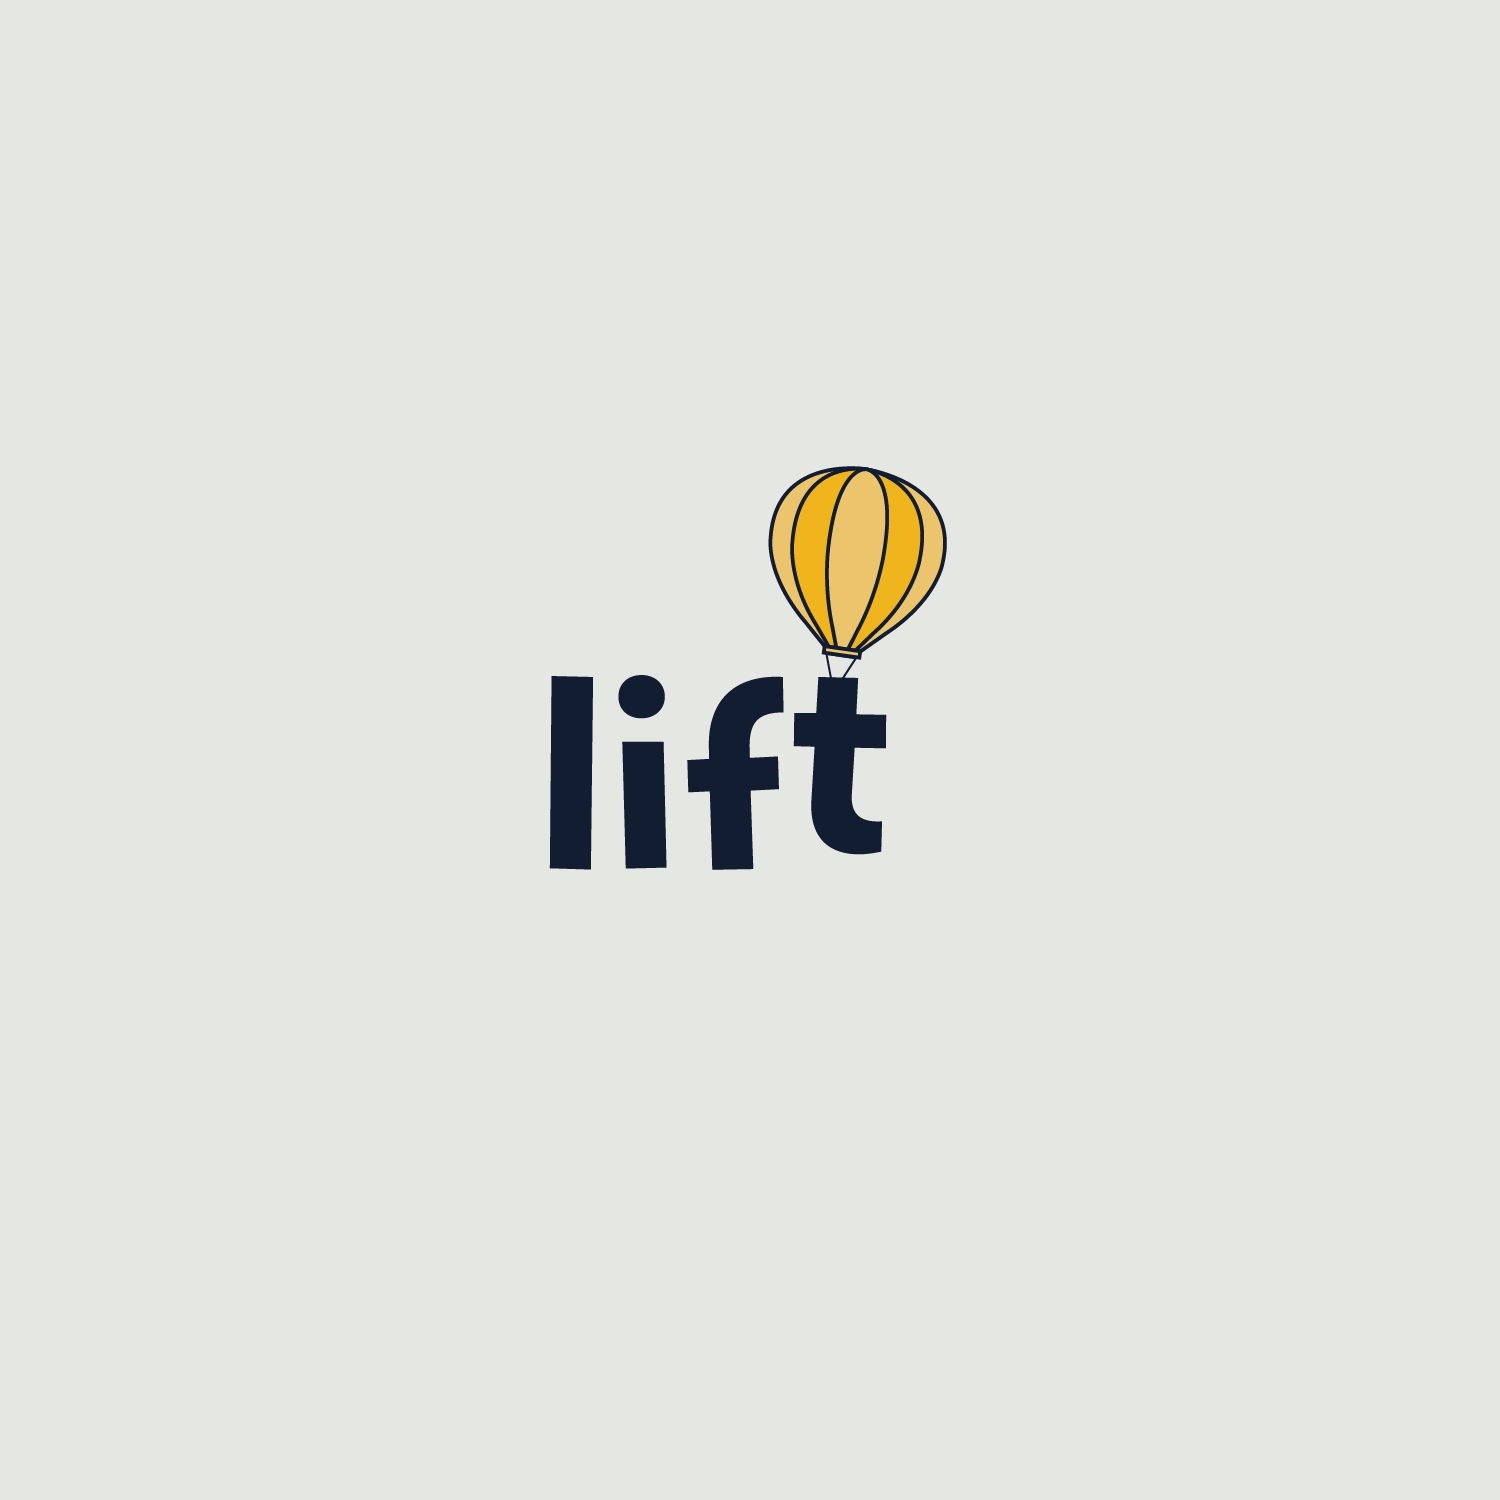 lift logo